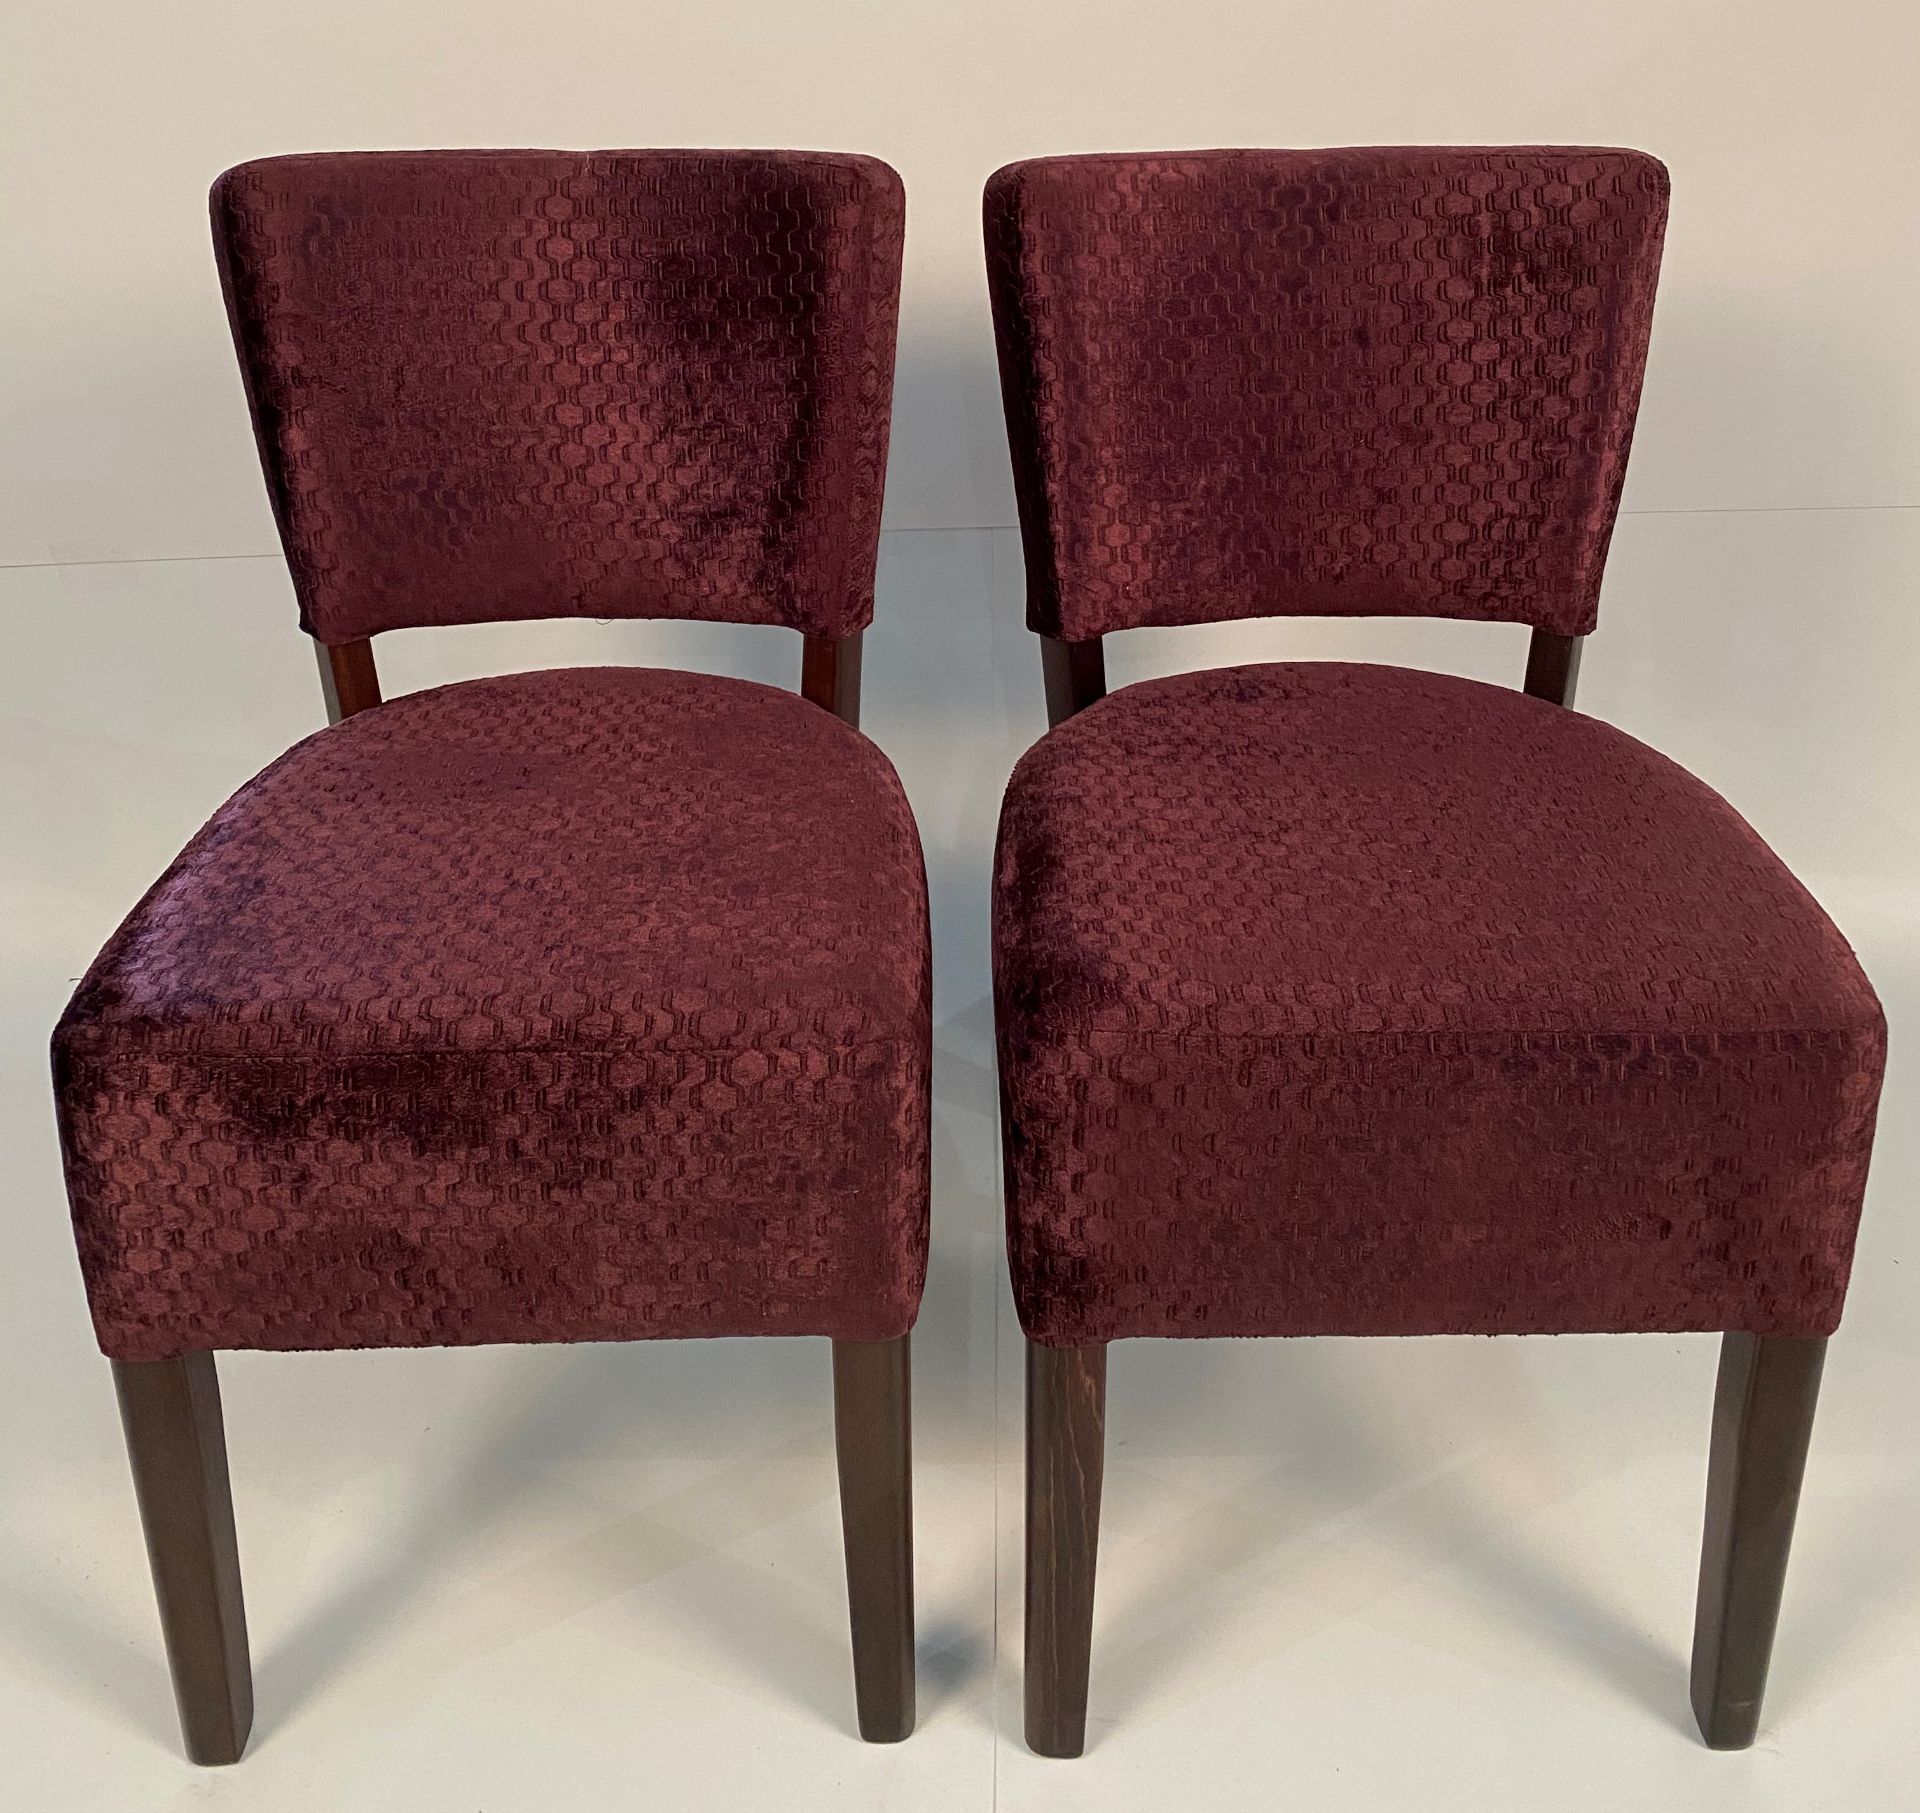 2 x Memphis Panaz Jewel 406 Claret side/dining chairs